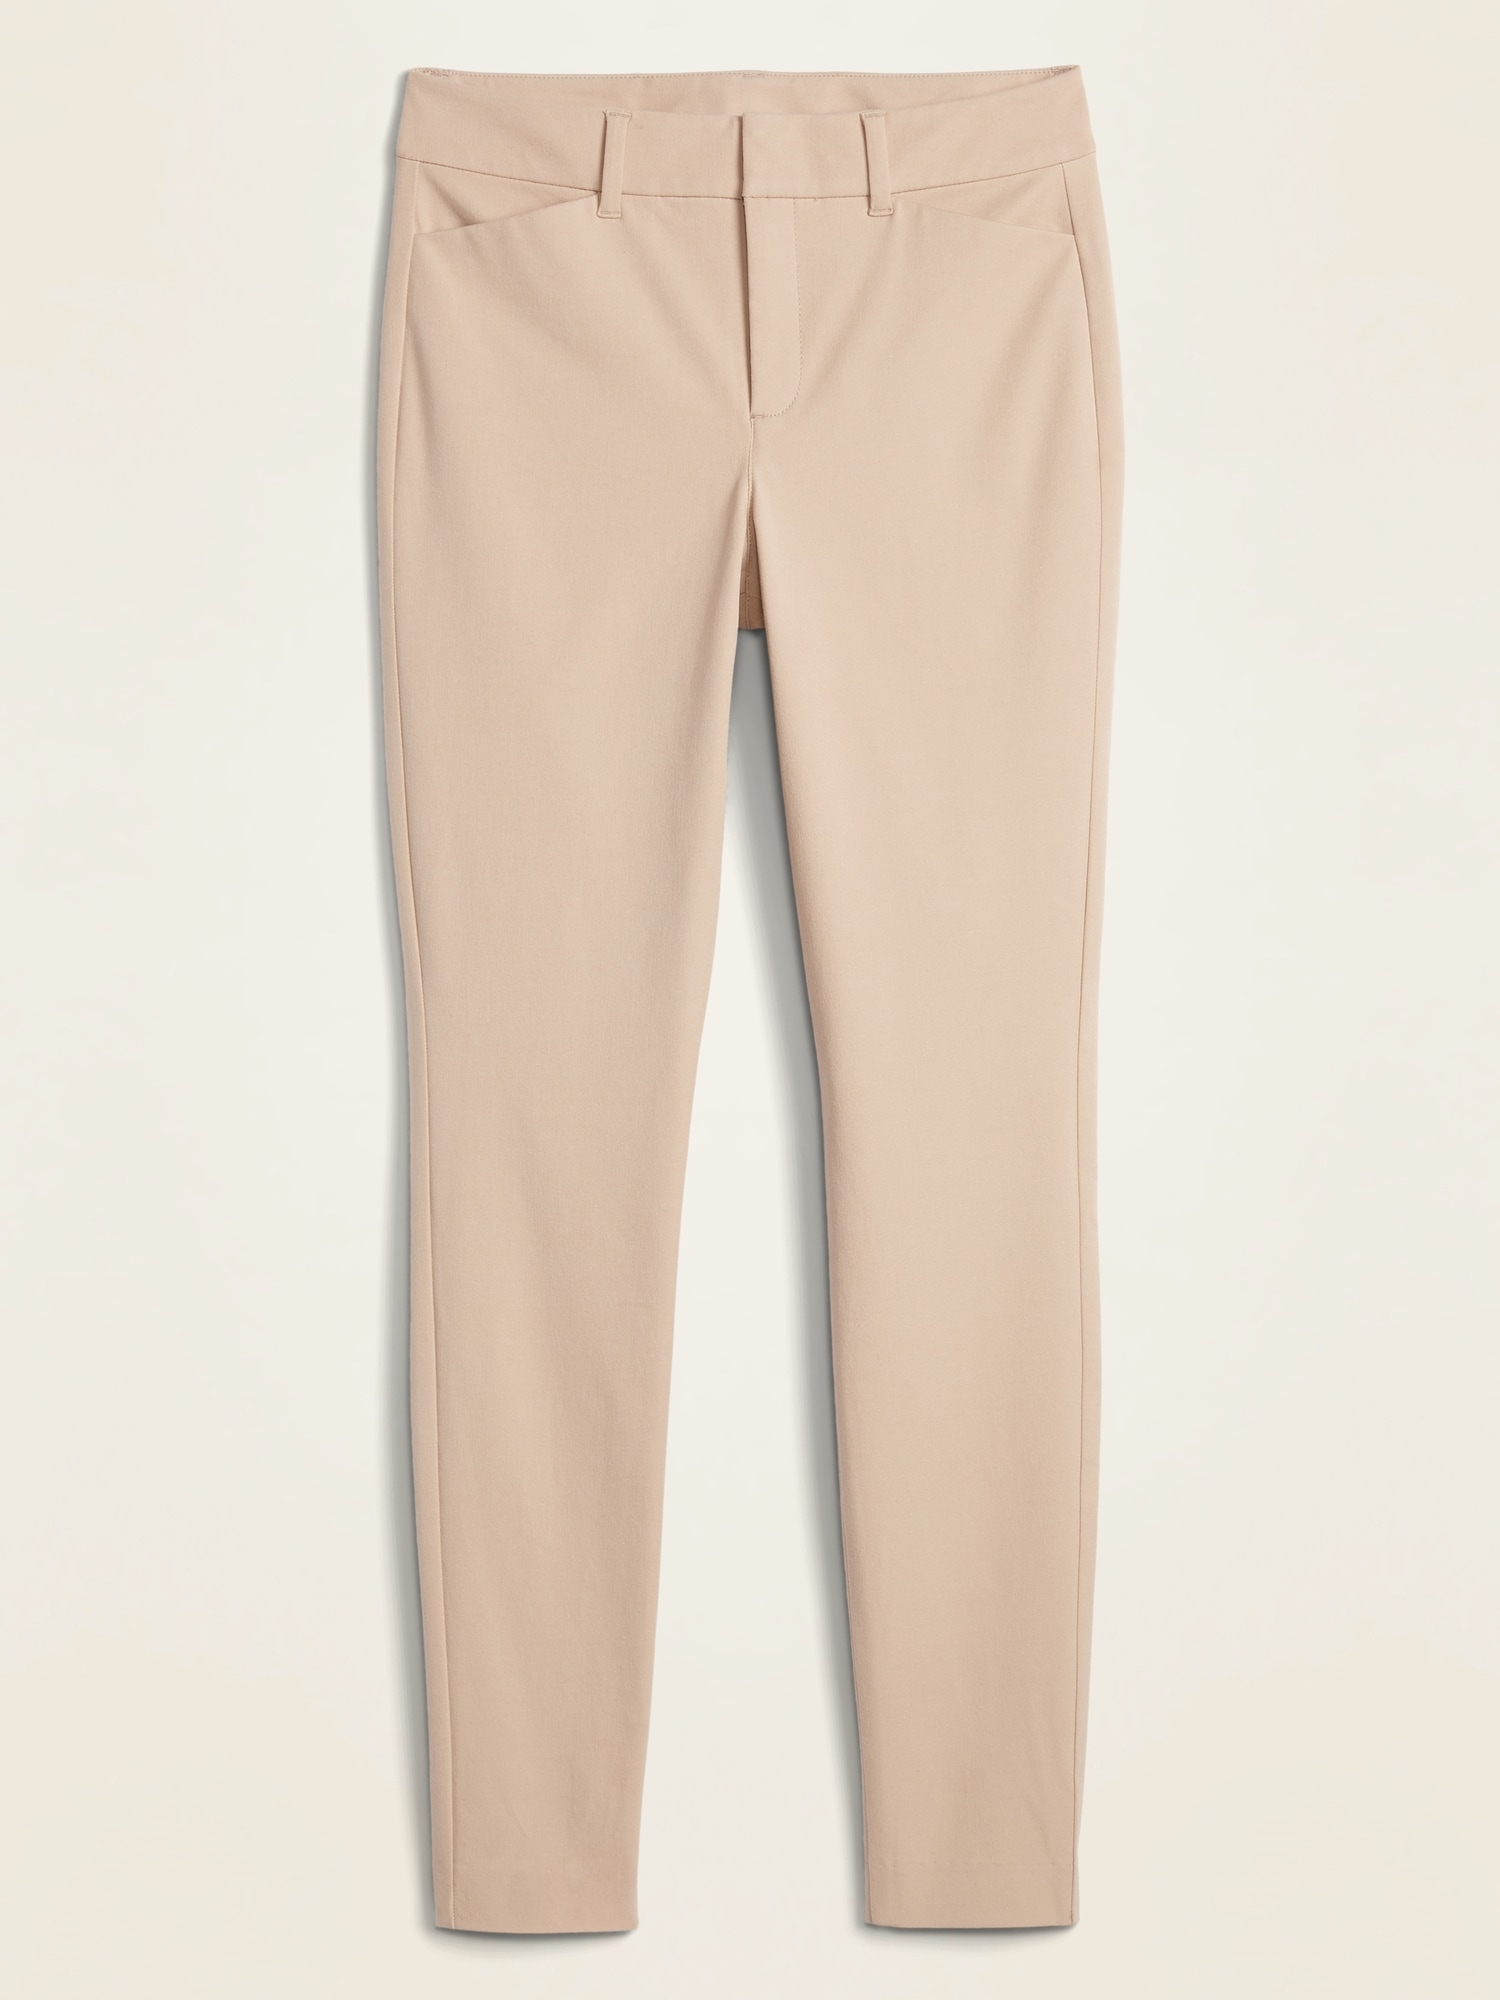 High-Waisted Pixie Full-Length Pants for Women | Old Navy